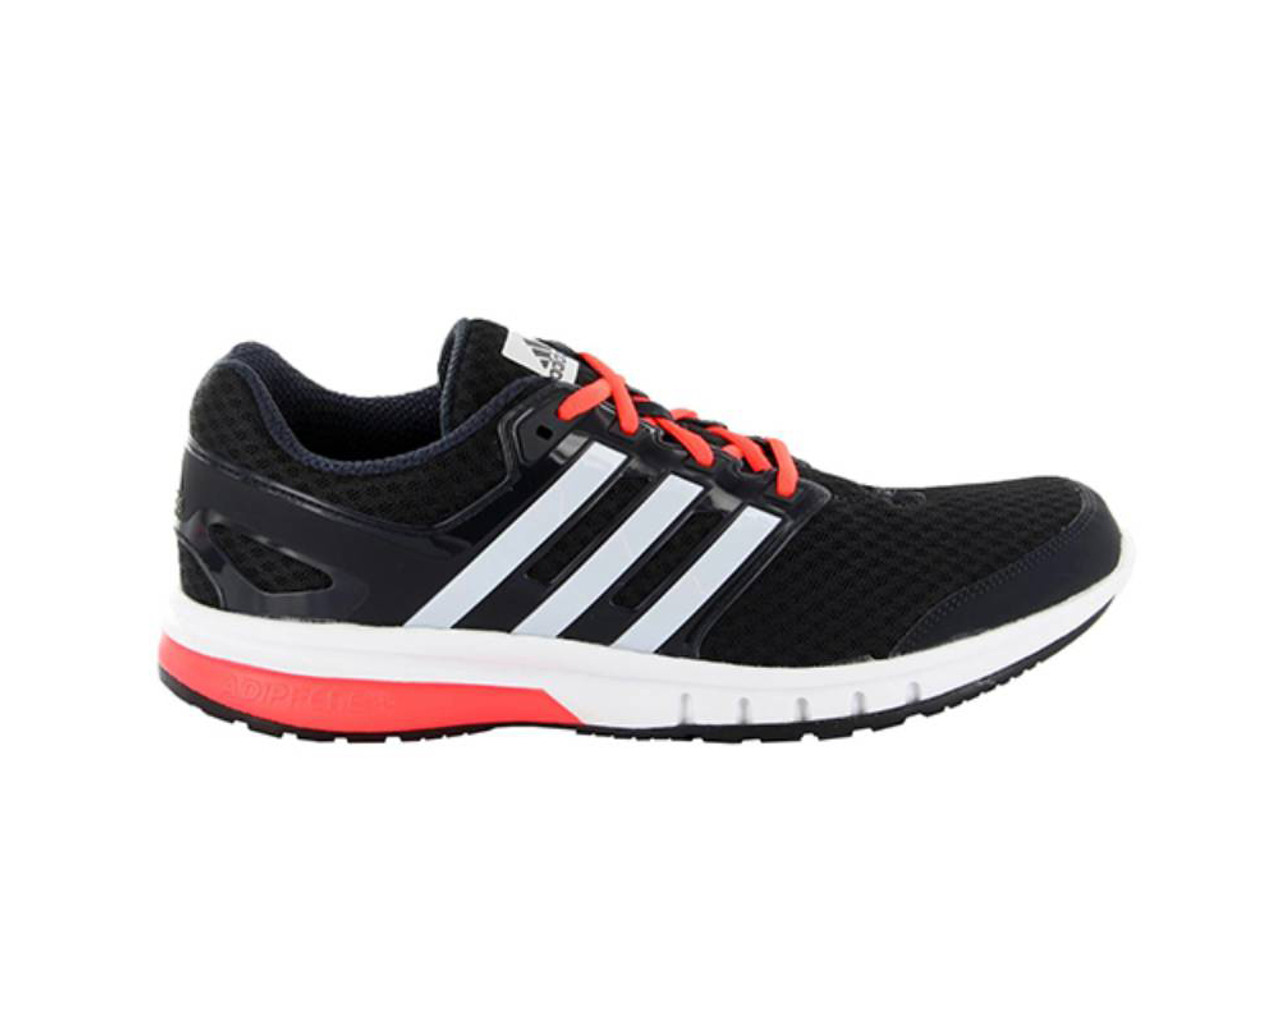 Adidas Men's Galaxy Elite Running Shoe - Grey | Discount Adidas Men's Athletic Shoes More - Shoolu.com | Shoolu.com